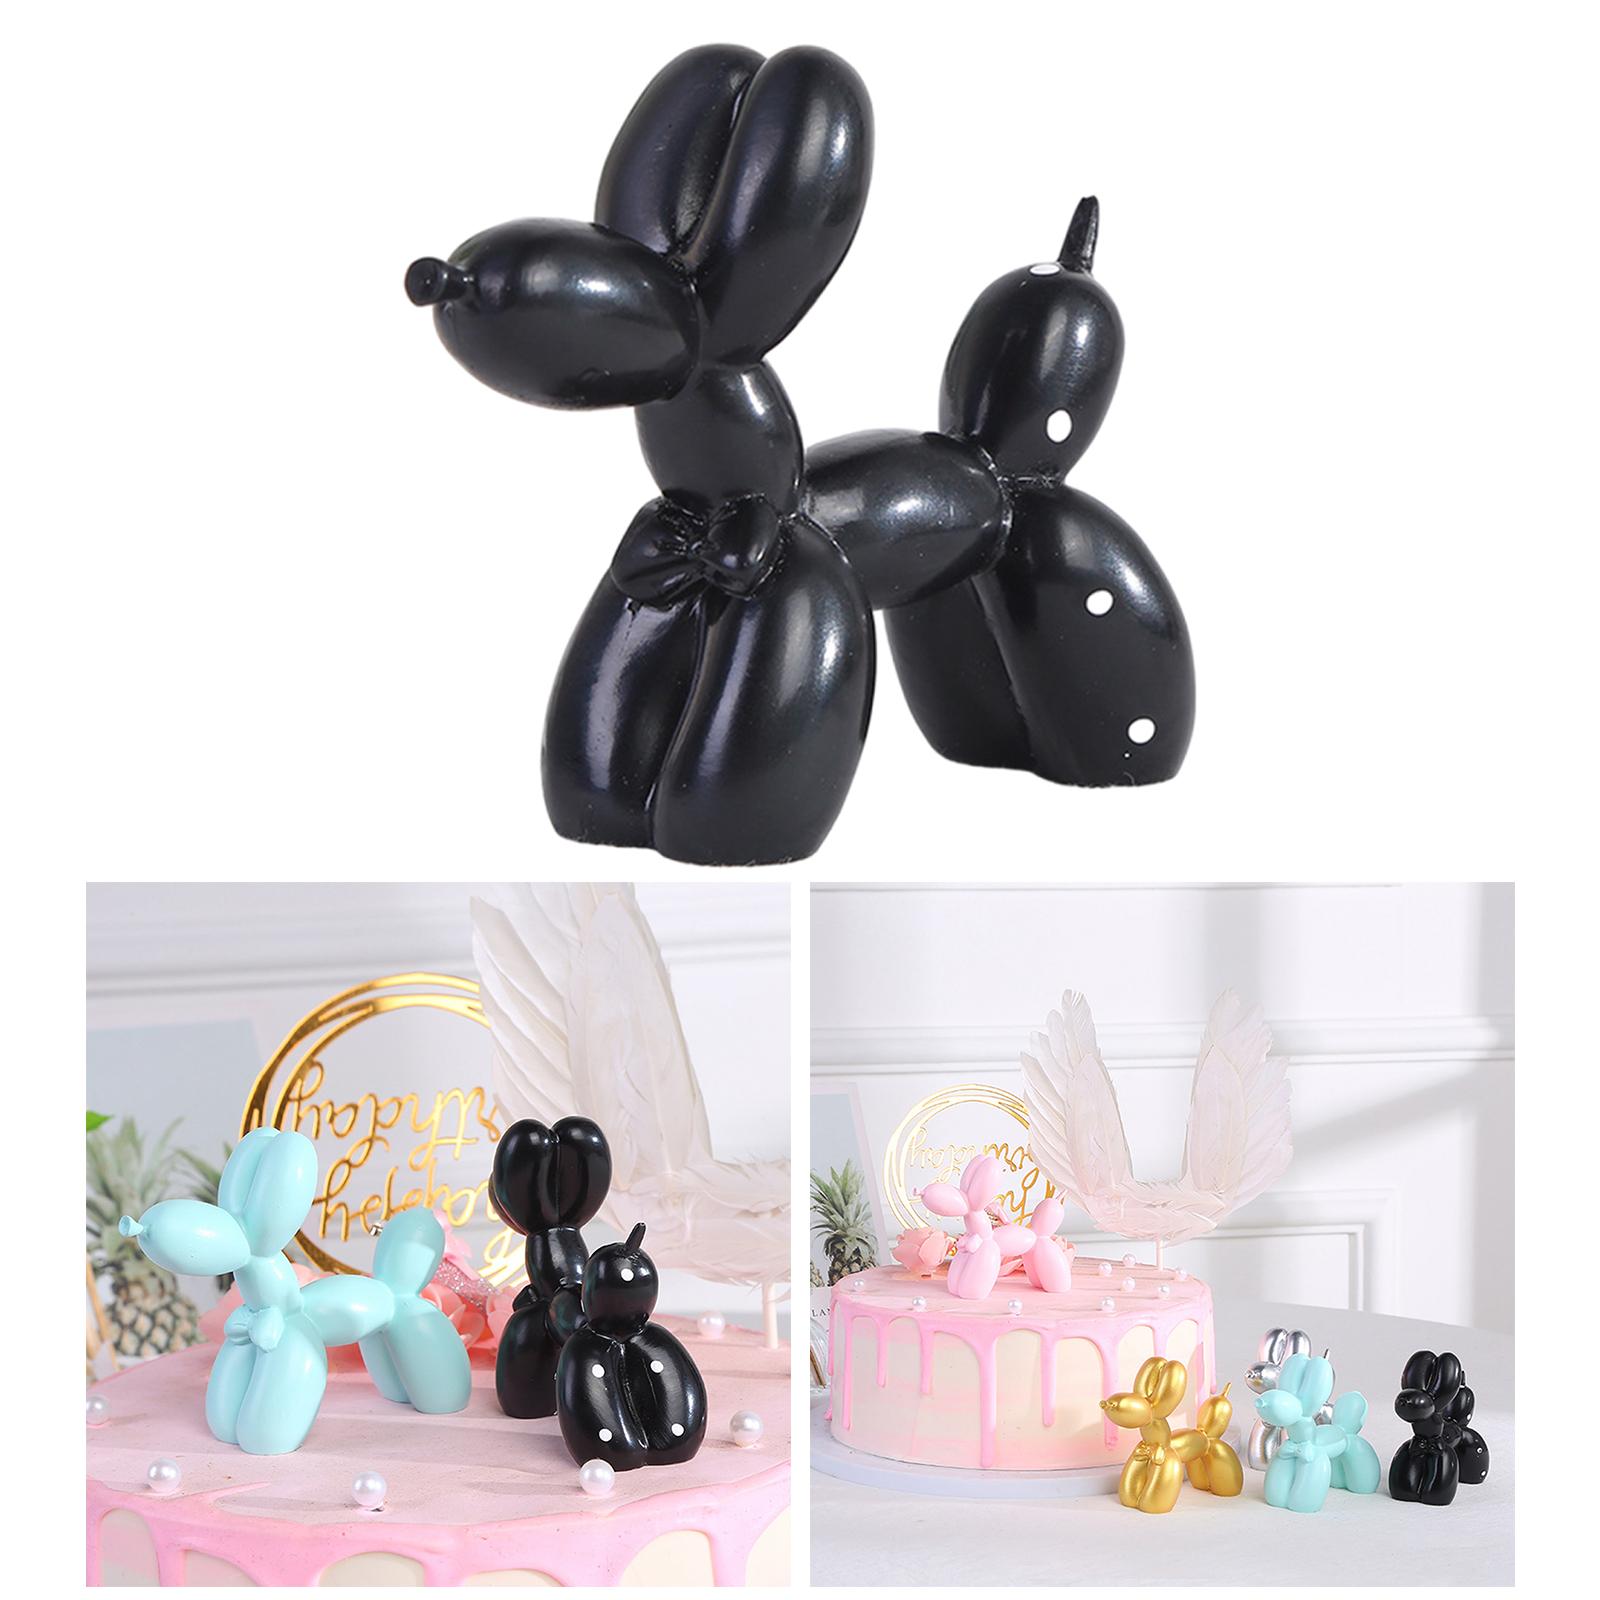 Cute Balloon Dog Resin Crafts Gift for Desktop Cake Baking Decoration black